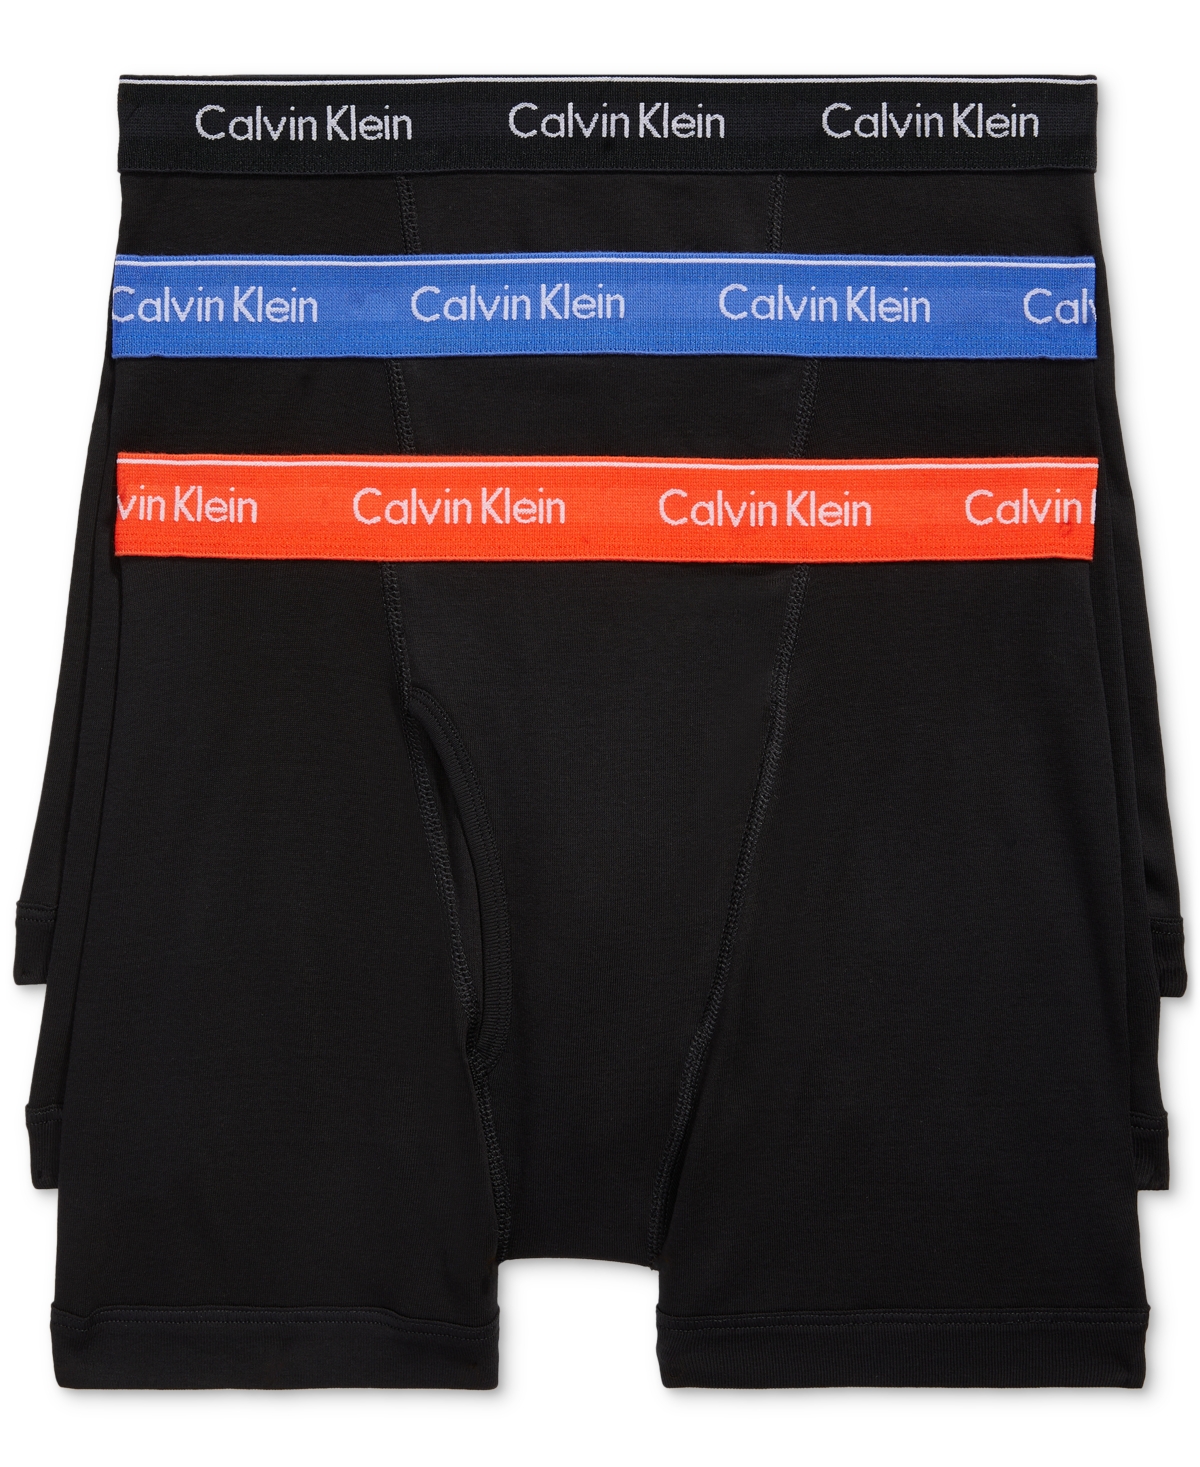 Men's 3-Pack Cotton Classics Boxer Briefs Underwear - Black Assorted